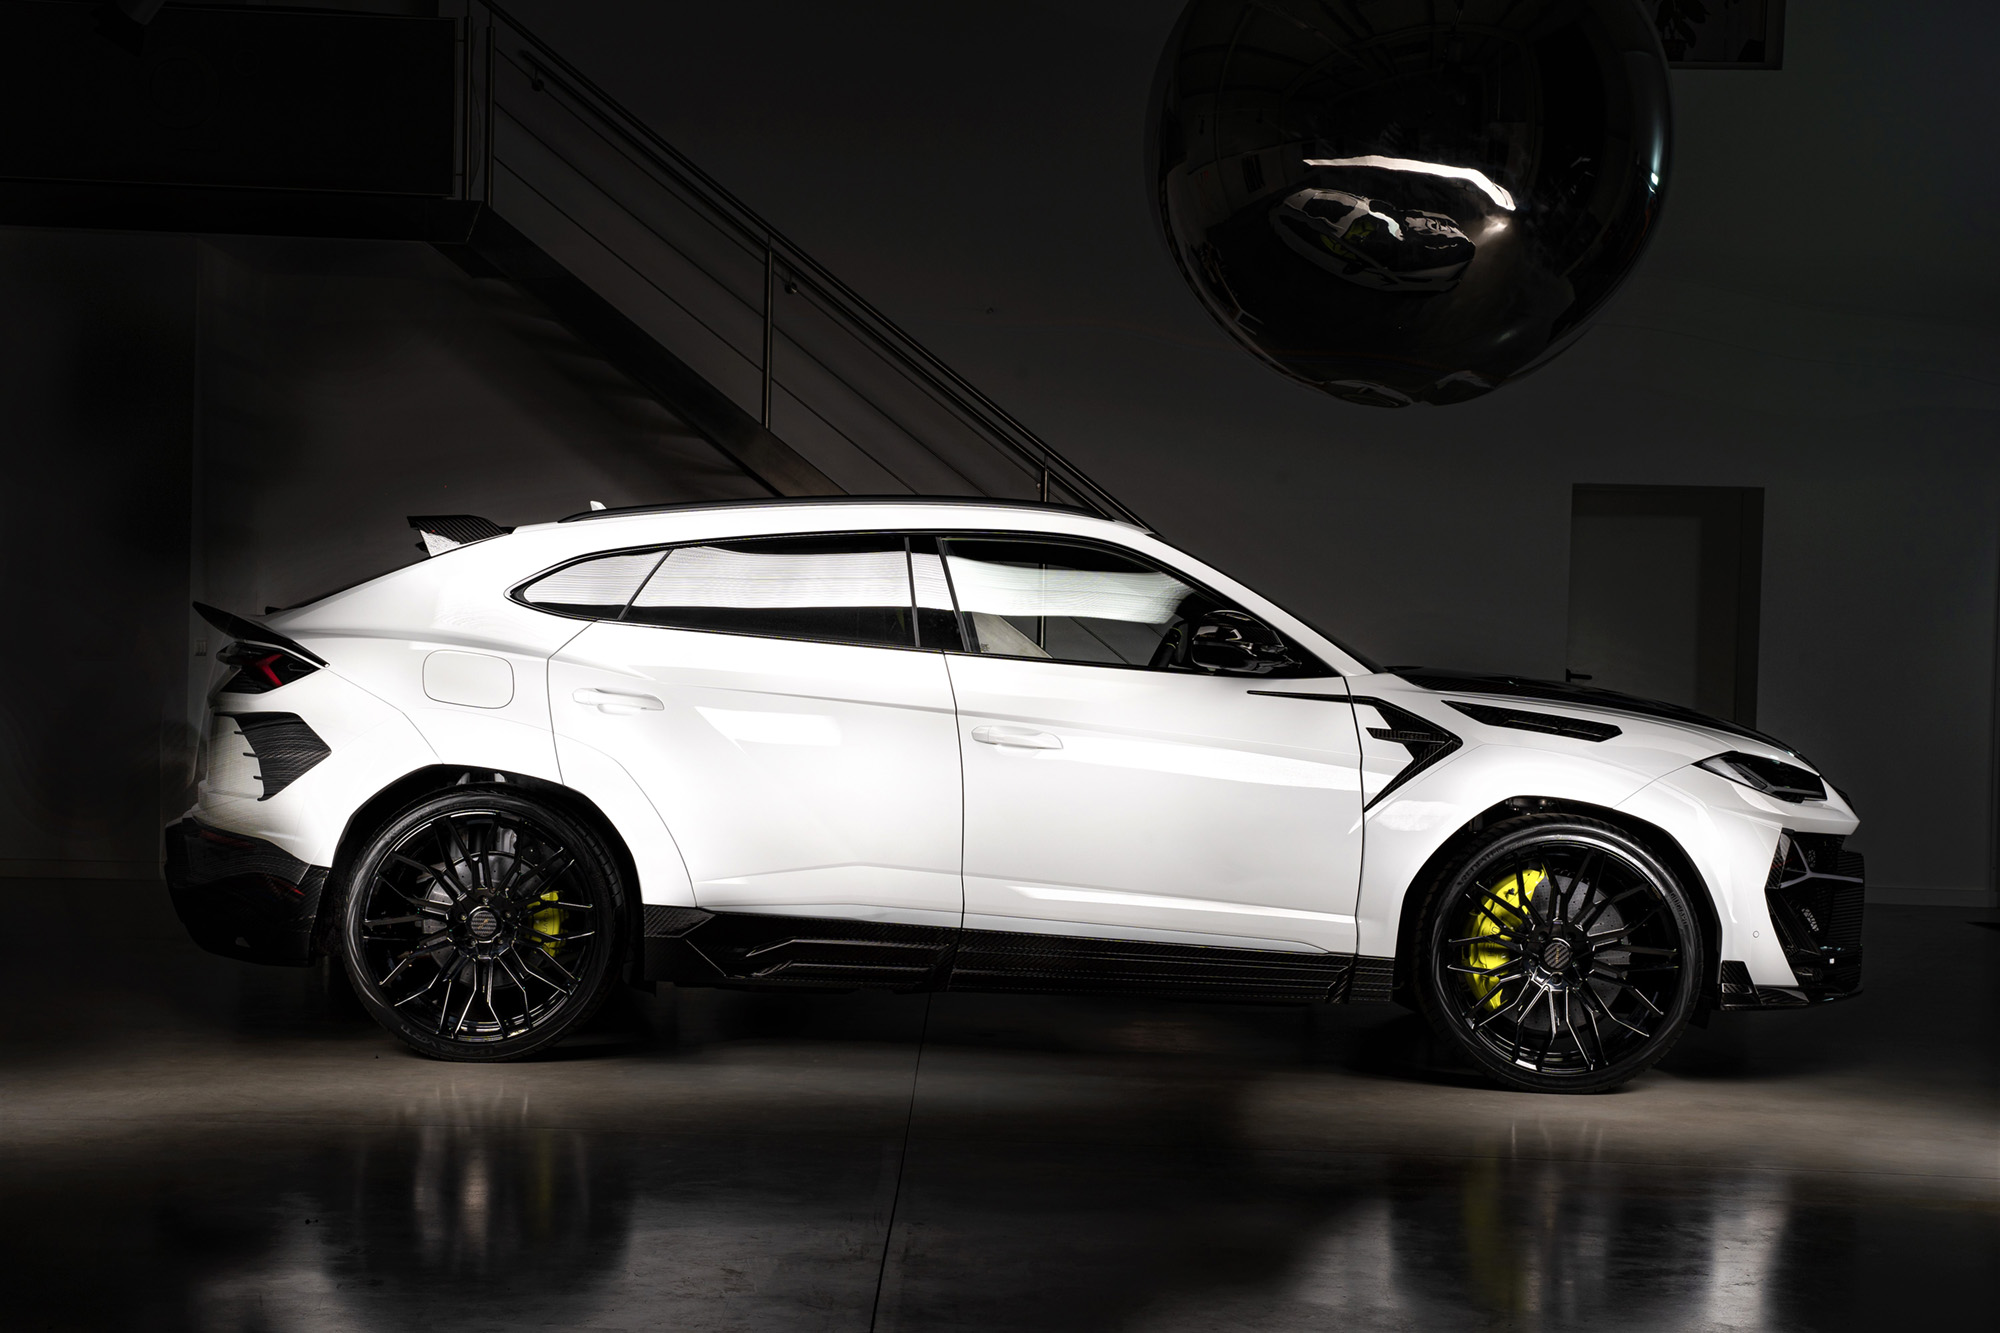 Check price and buy Keyvany Carbon Fiber Body kit set for Lamborghini Urus